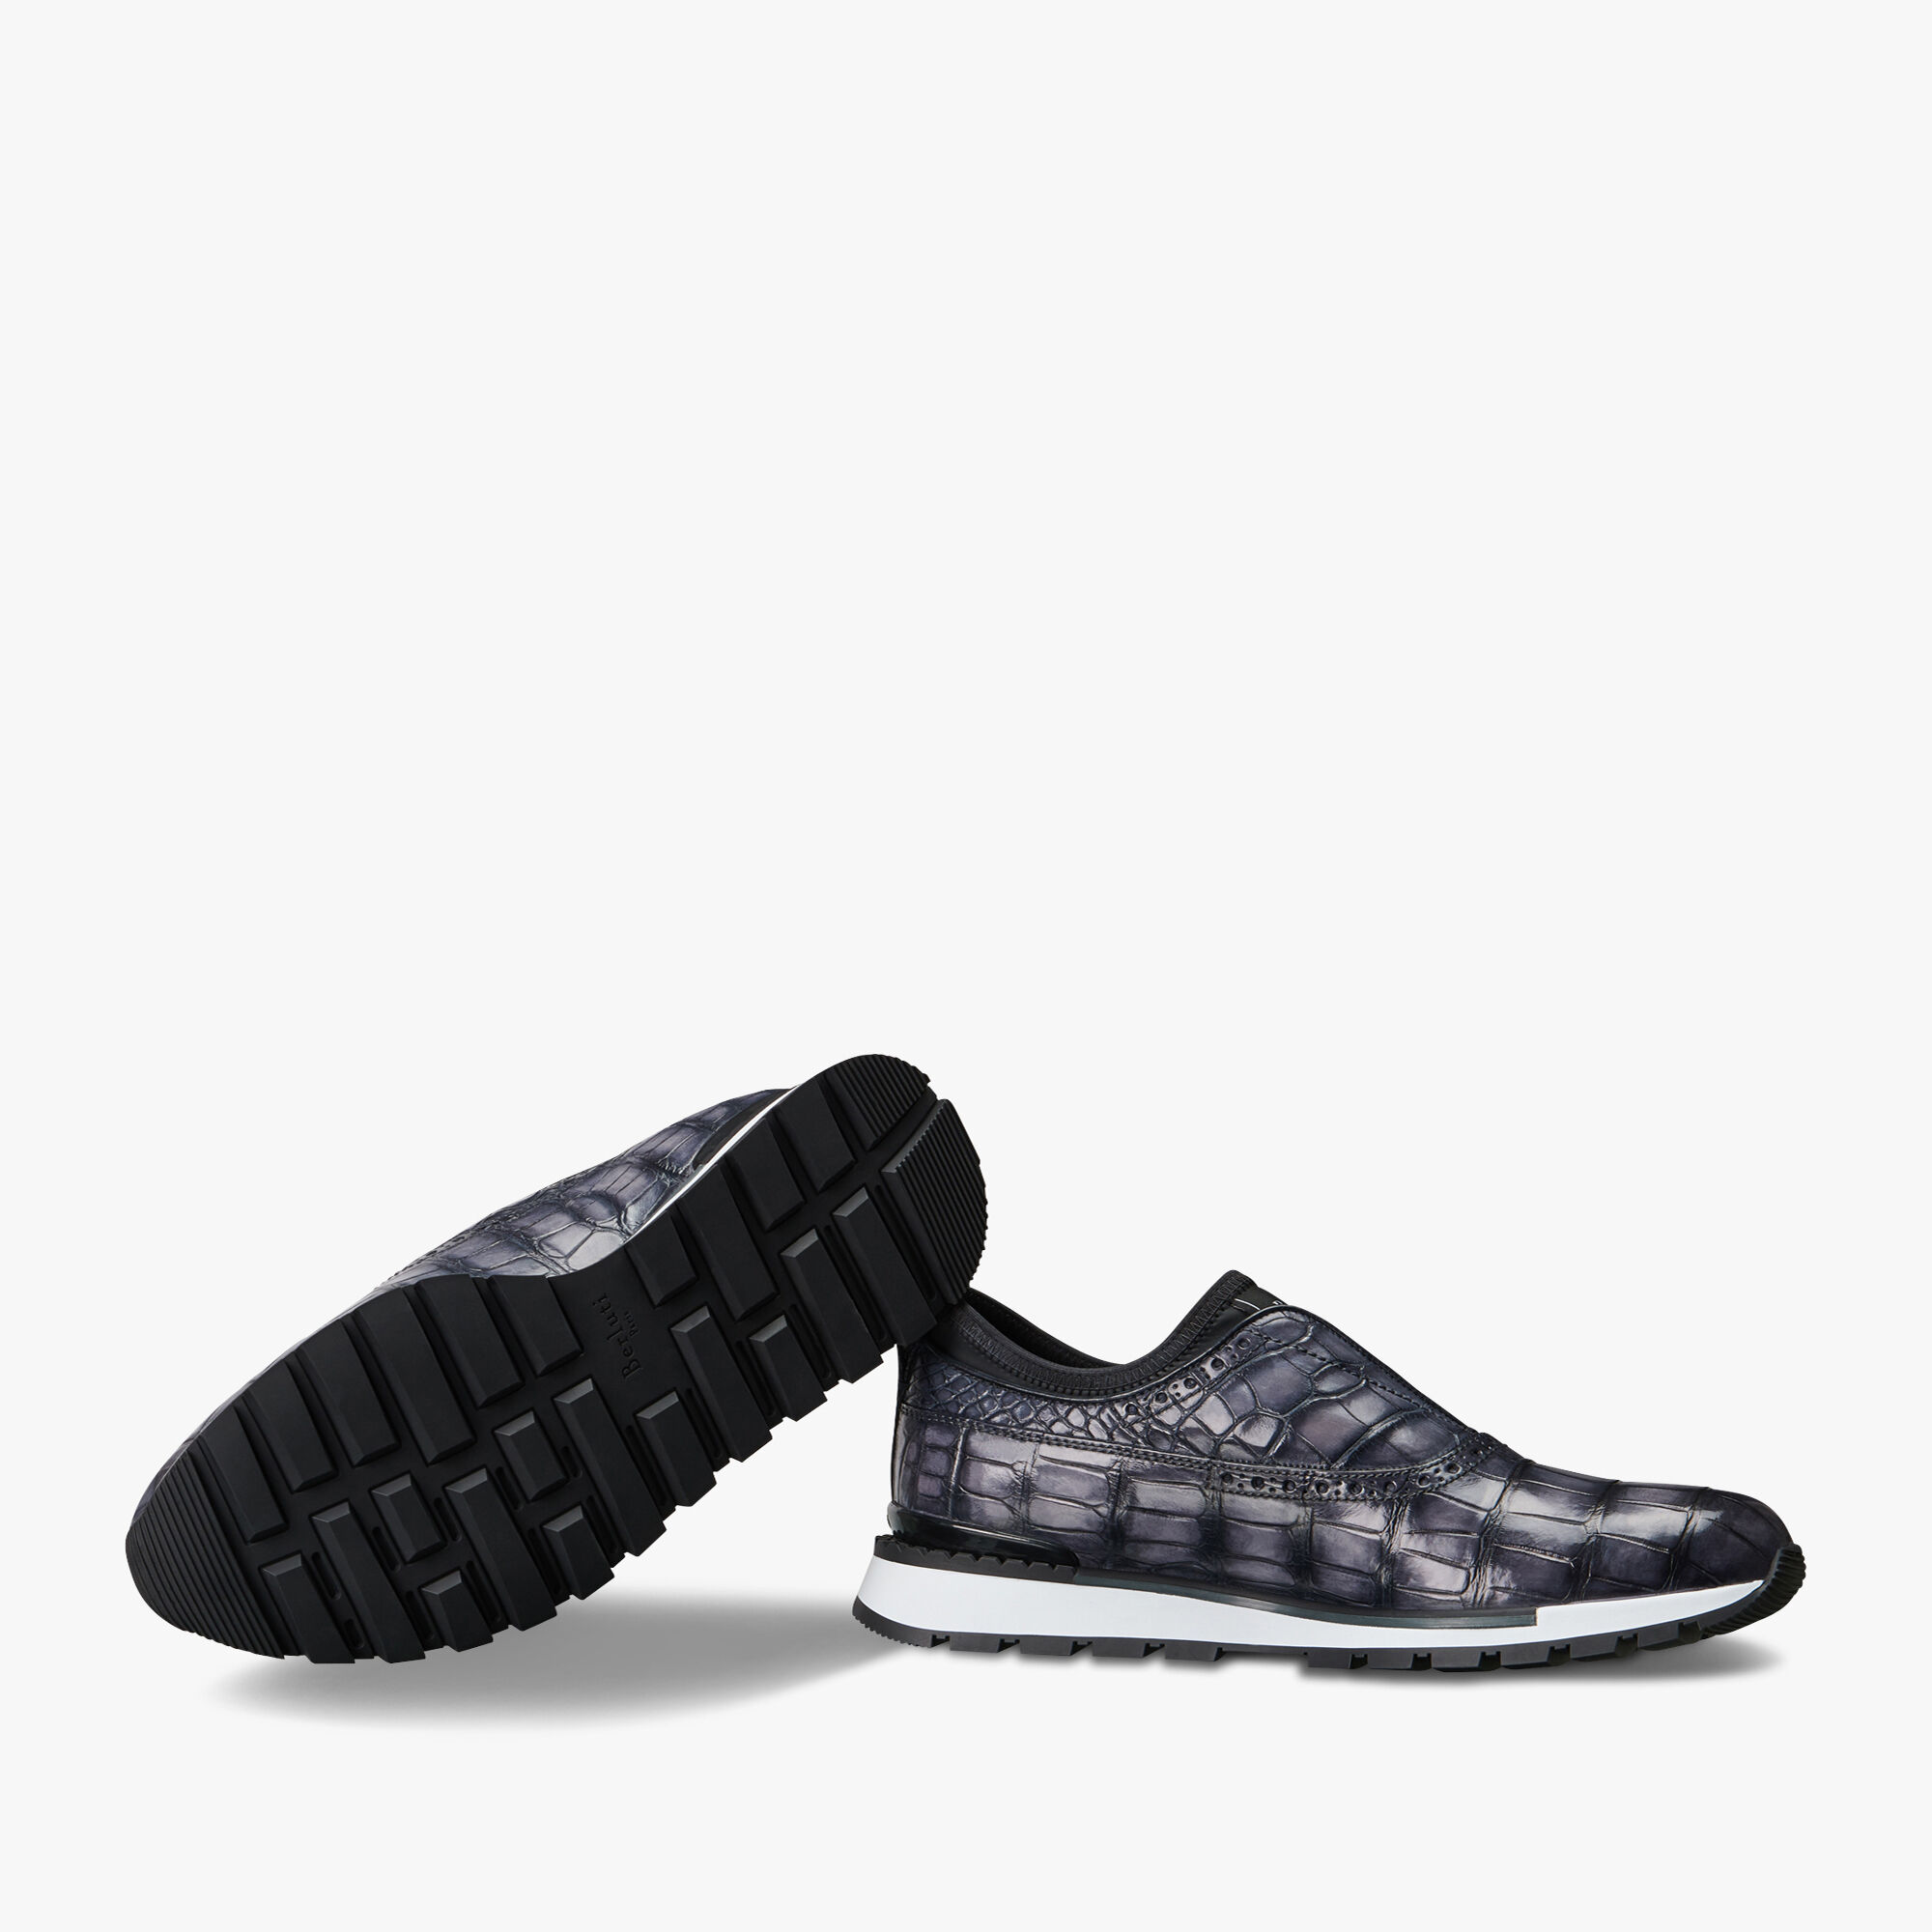 Fast Track Torino Alligator Leather & Neoprene Sneaker - Berluti